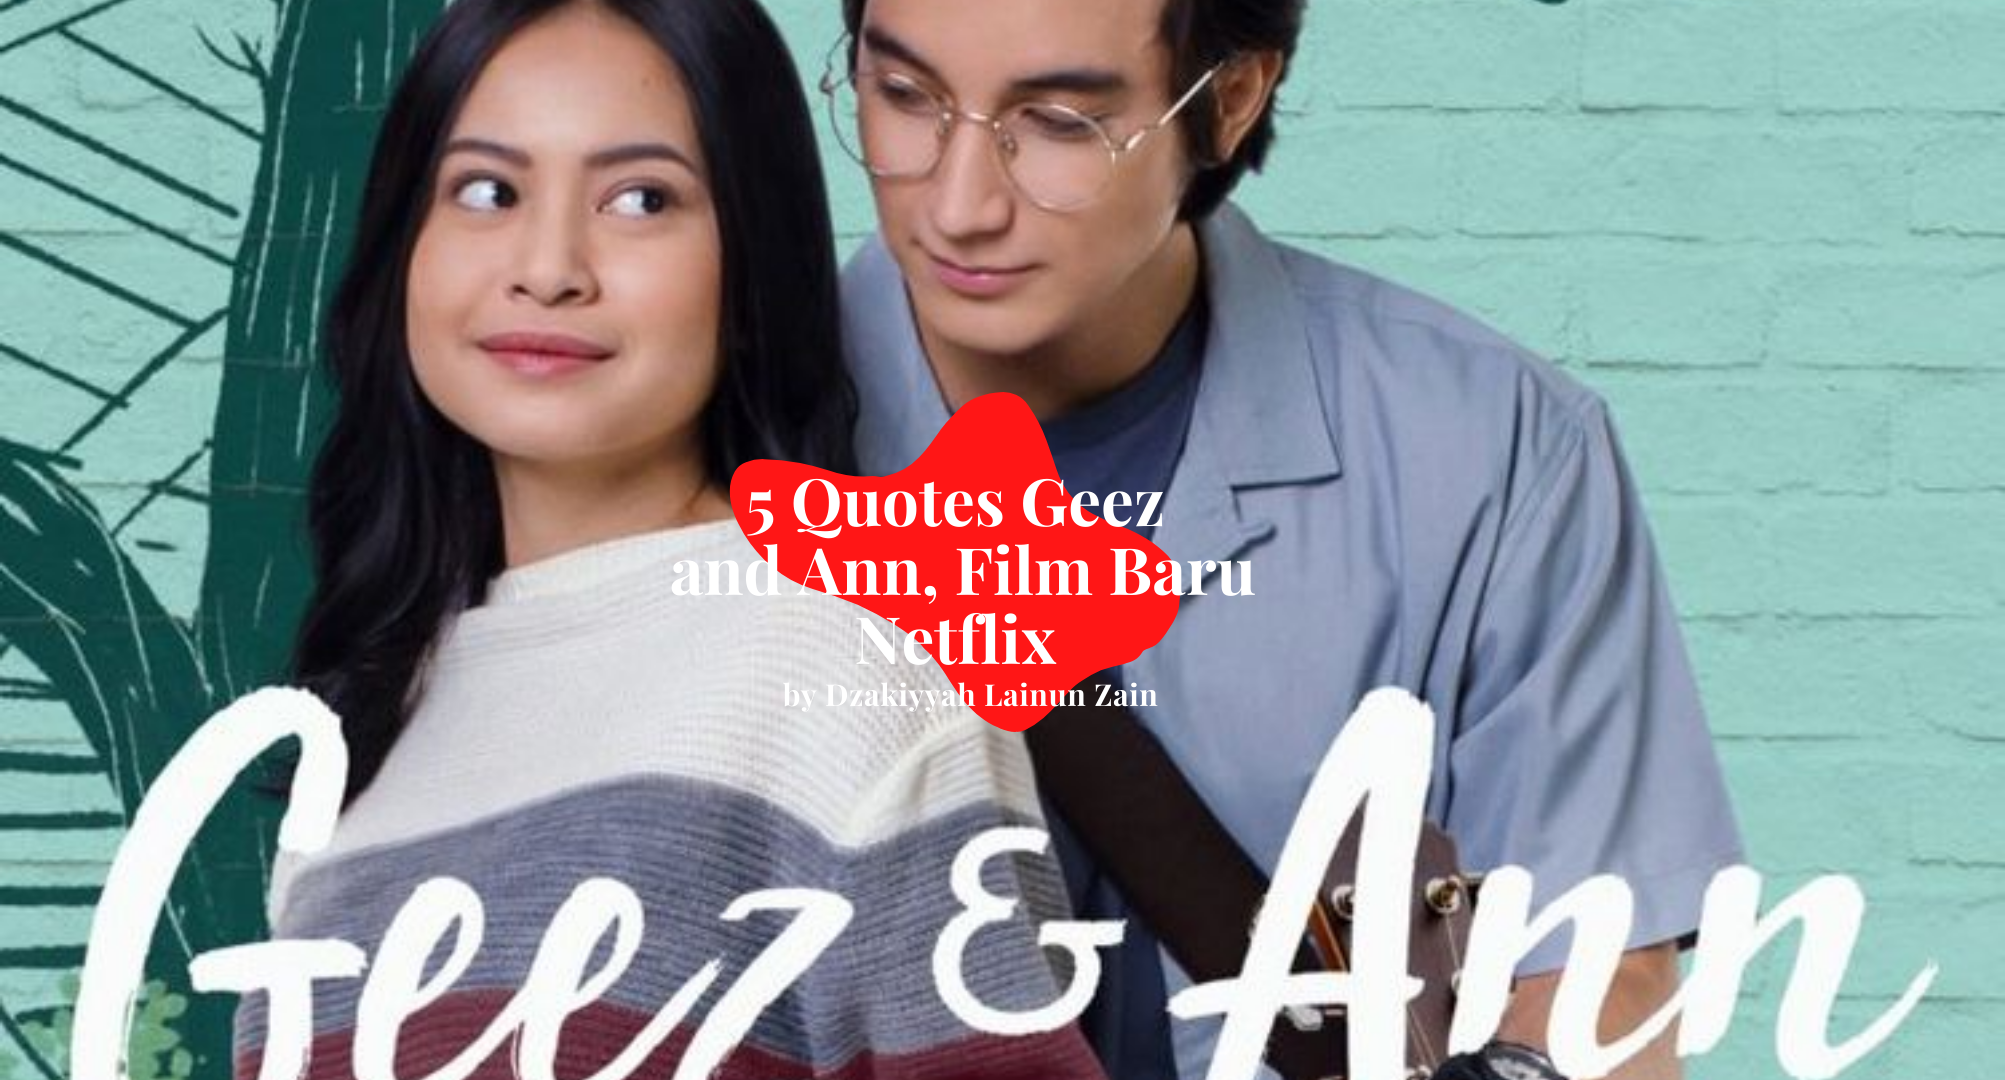 5 Quotes Geez and Ann, Film Baru Netflix dari Buku Rintik Sedu